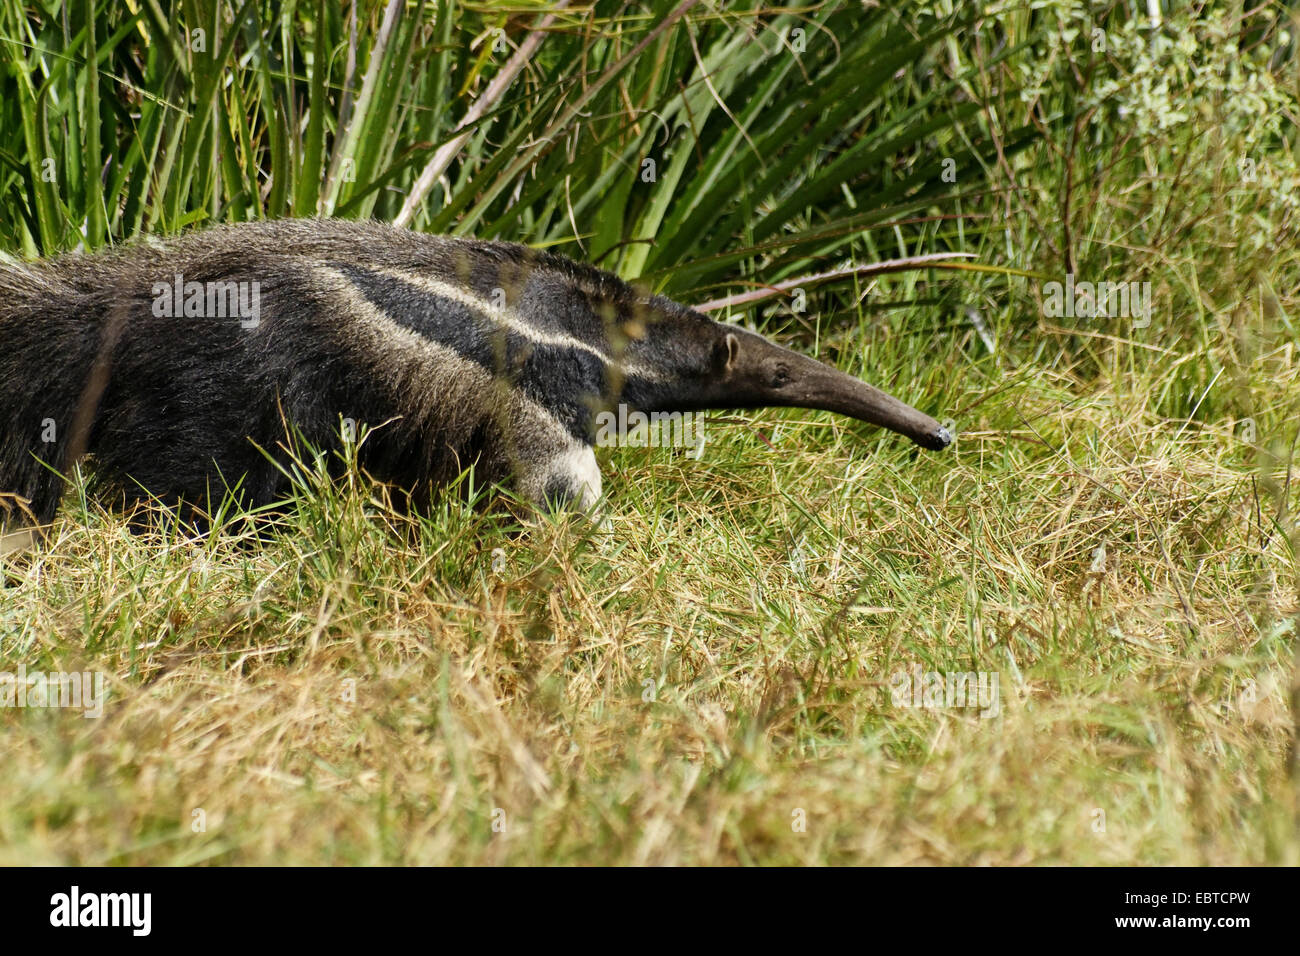 giant anteater (Myrmecophaga tridactyla), walking through grass, Brazil, Pantanal Stock Photo